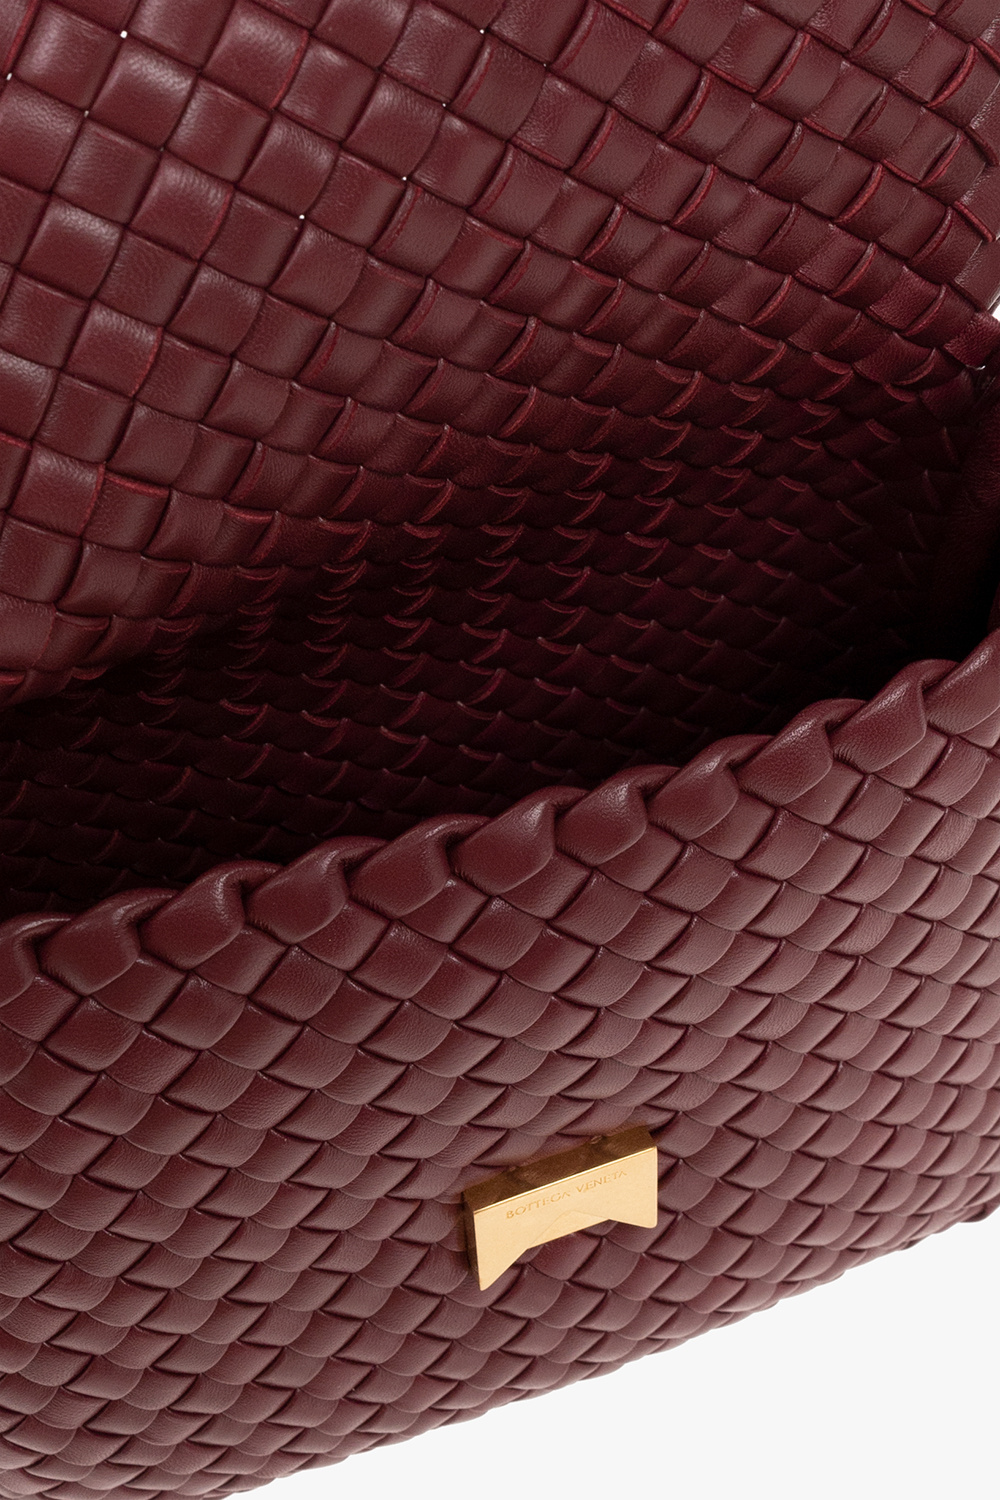 Bottega Veneta - Cobble Intrecciato-leather Shoulder Bag - Womens - Dark Brown